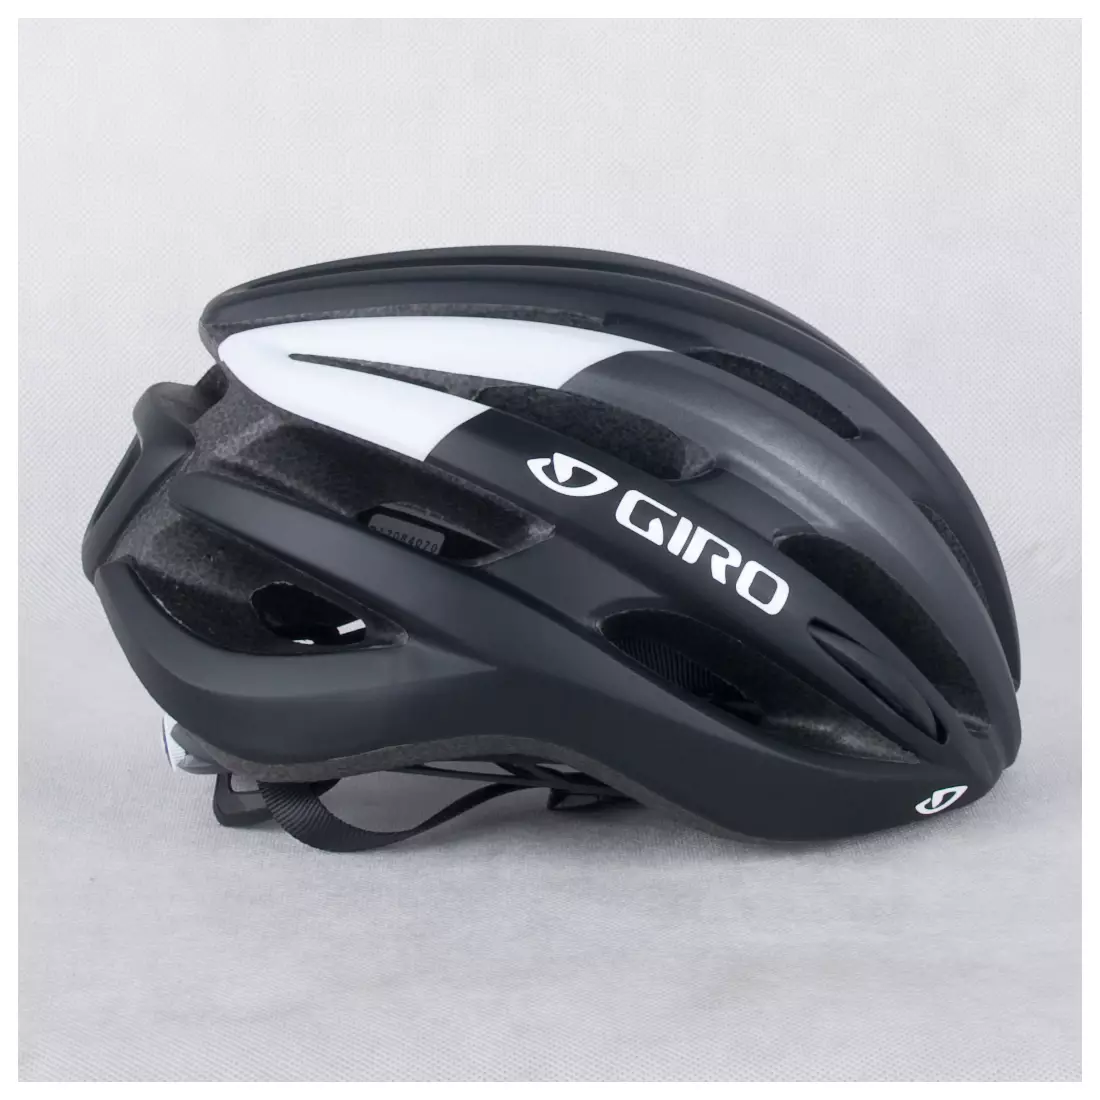 GIRO FORAY - black and white matte bicycle helmet